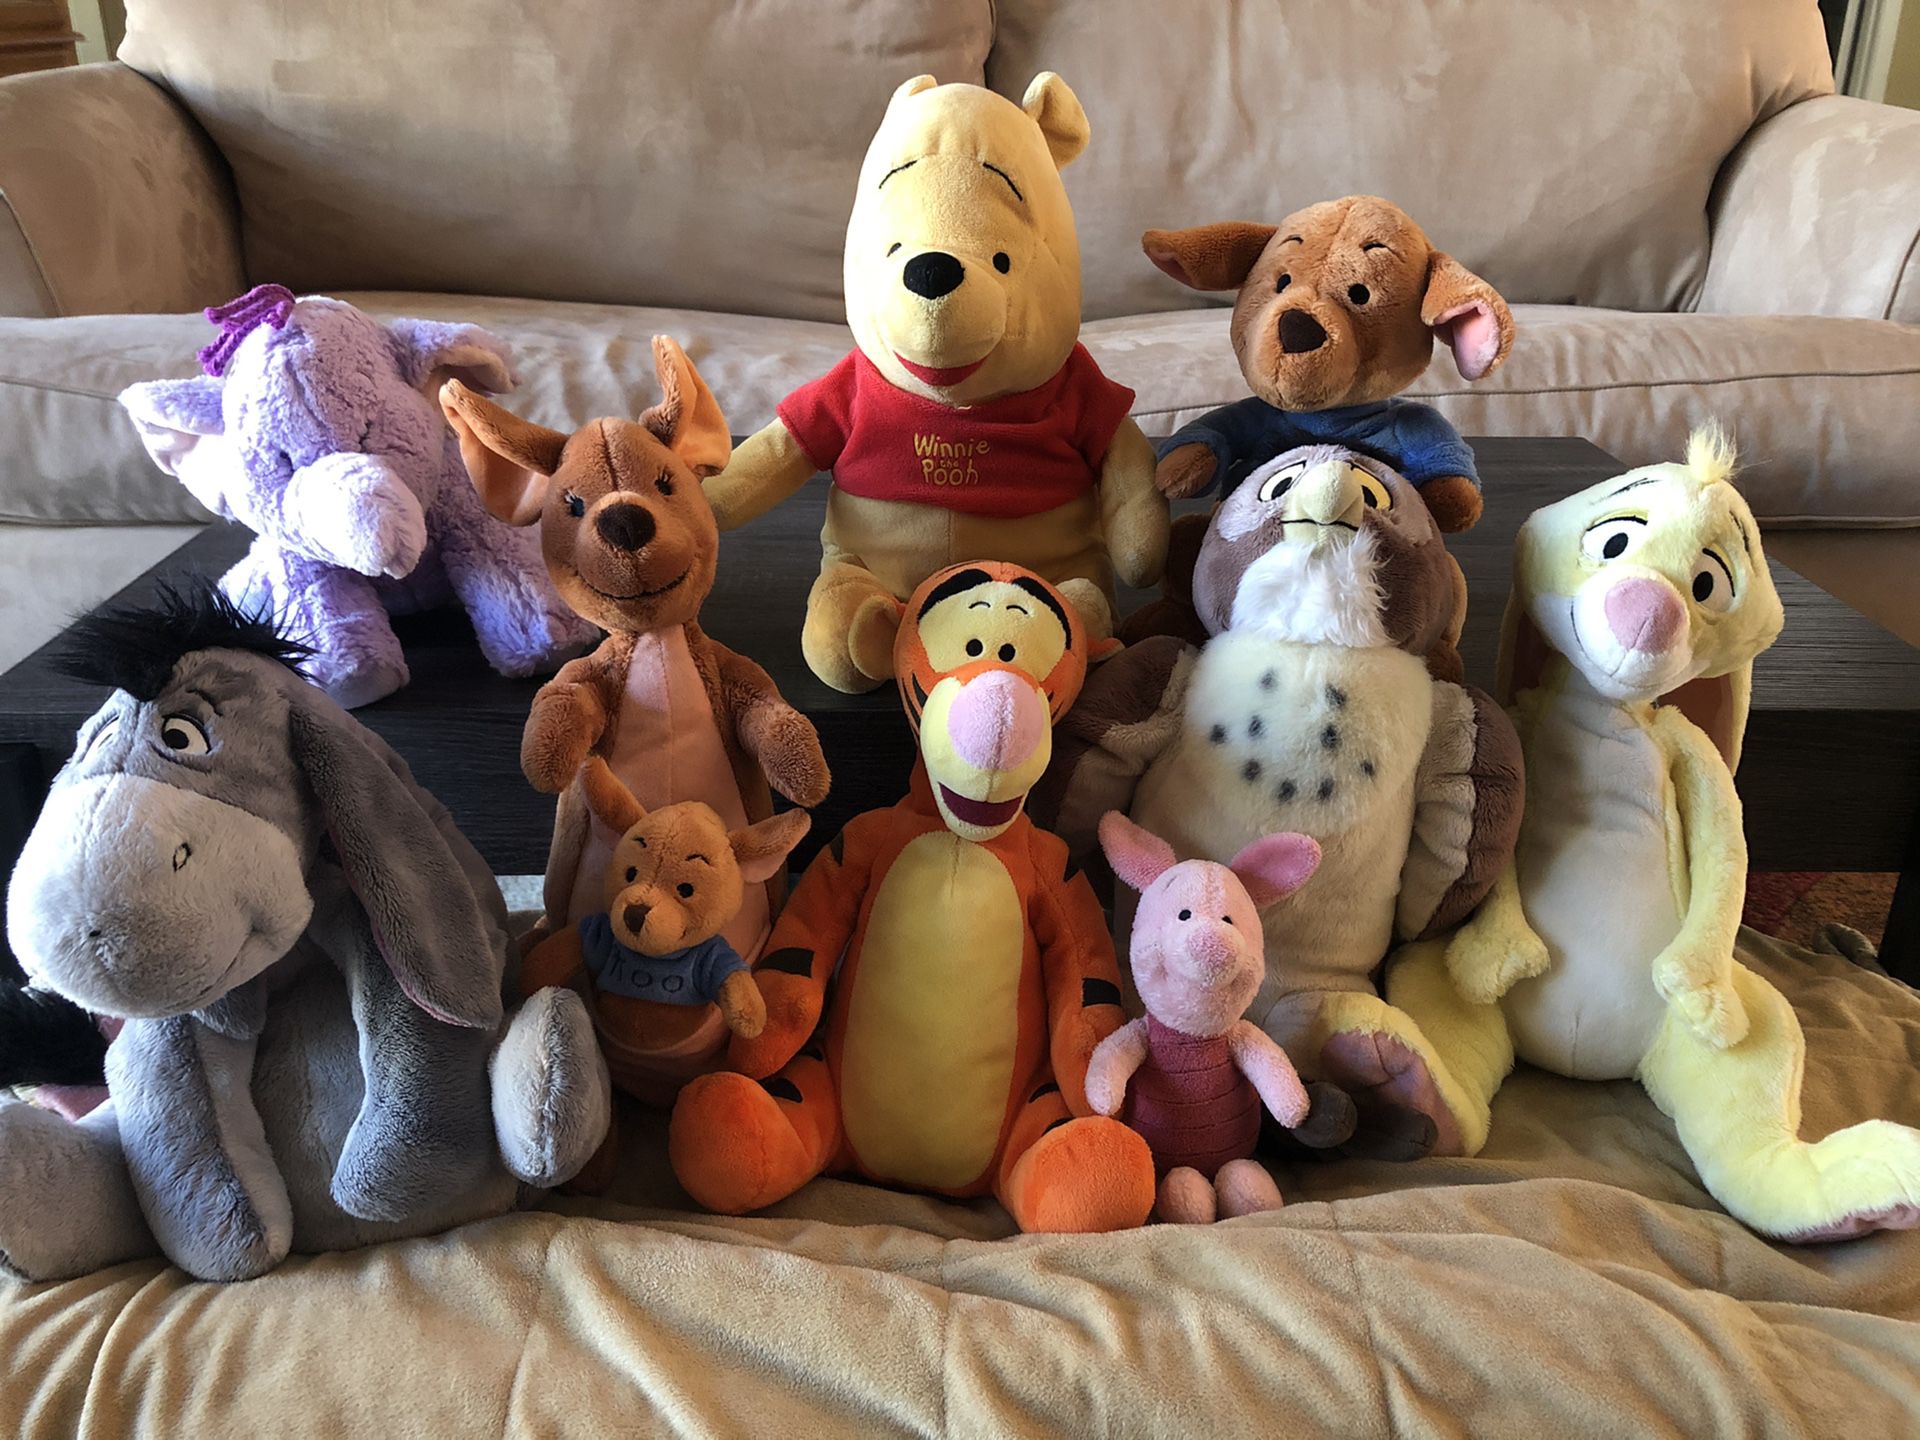 Winnie the Pooh stuffed animal collection